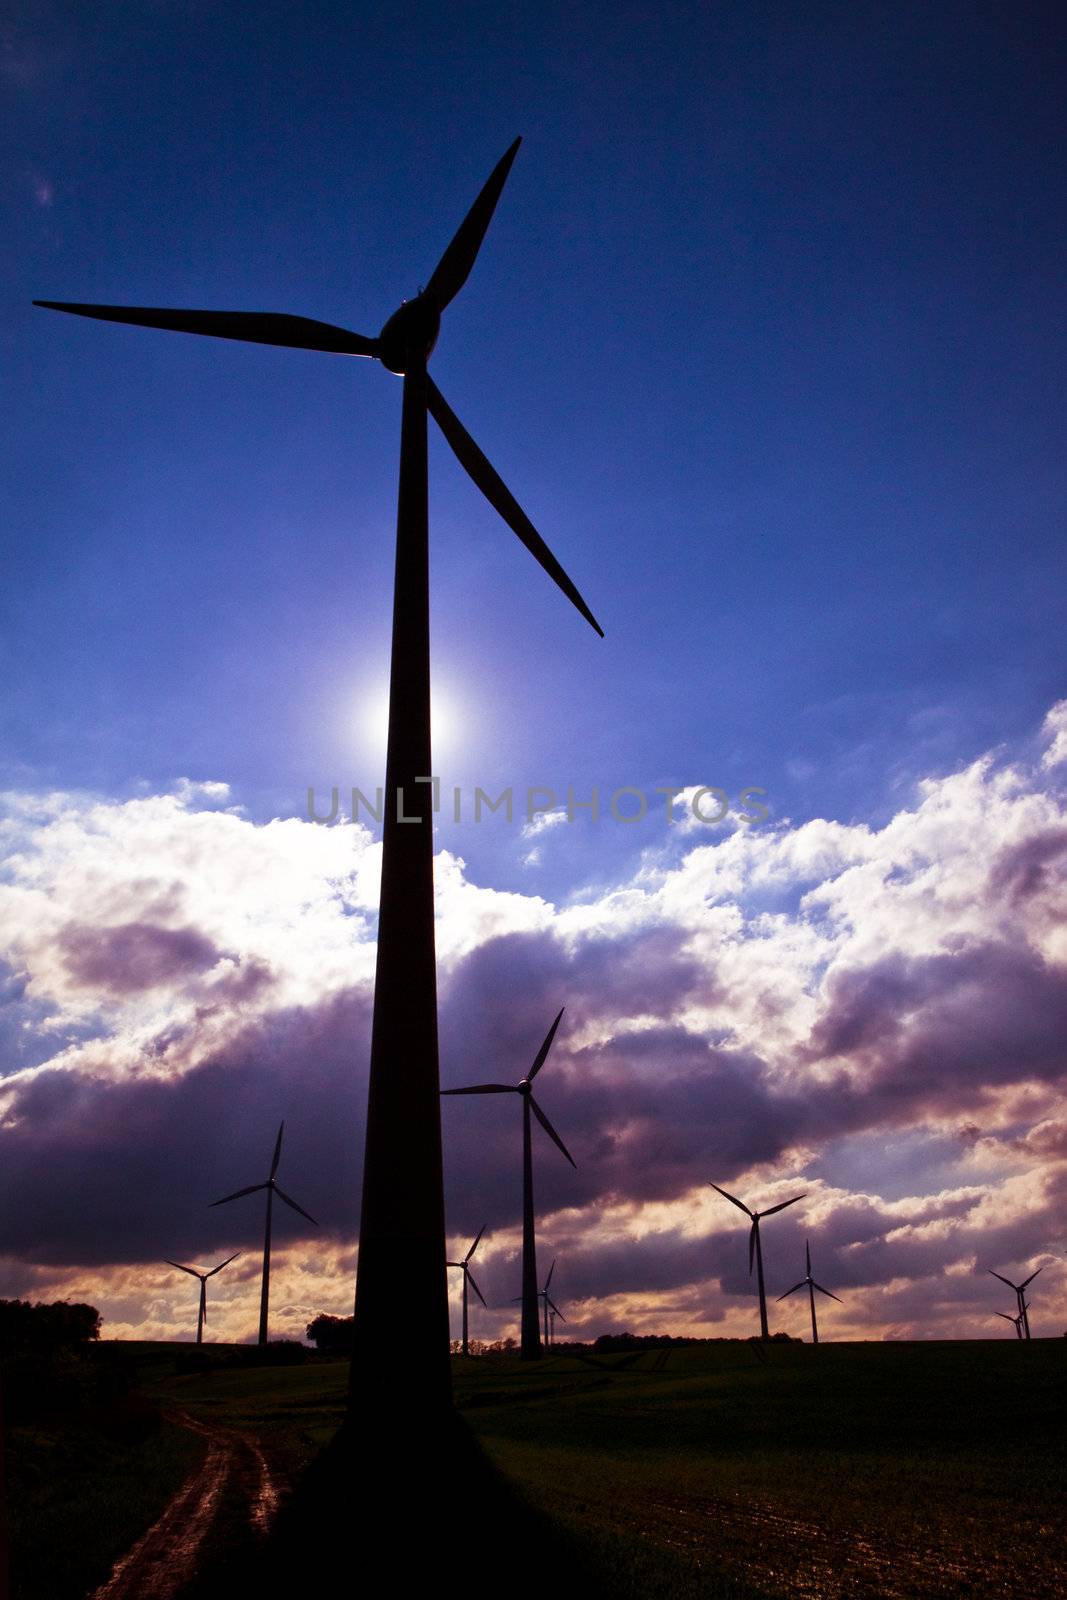 Windmills against a cloudy sky by Gbuglok